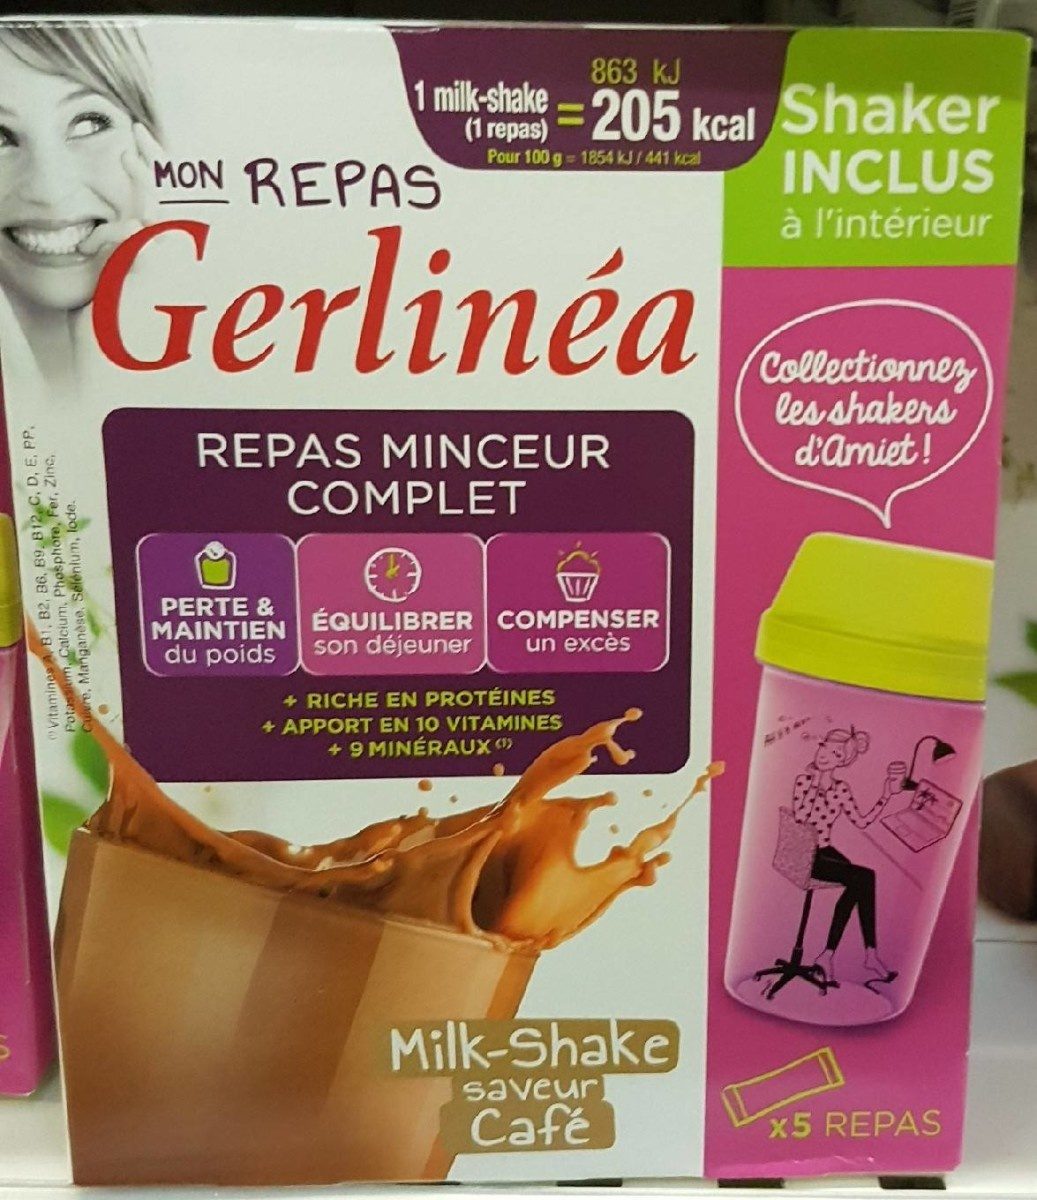 Mon Repas Gerlinéa Milk-shake Café - Product - fr